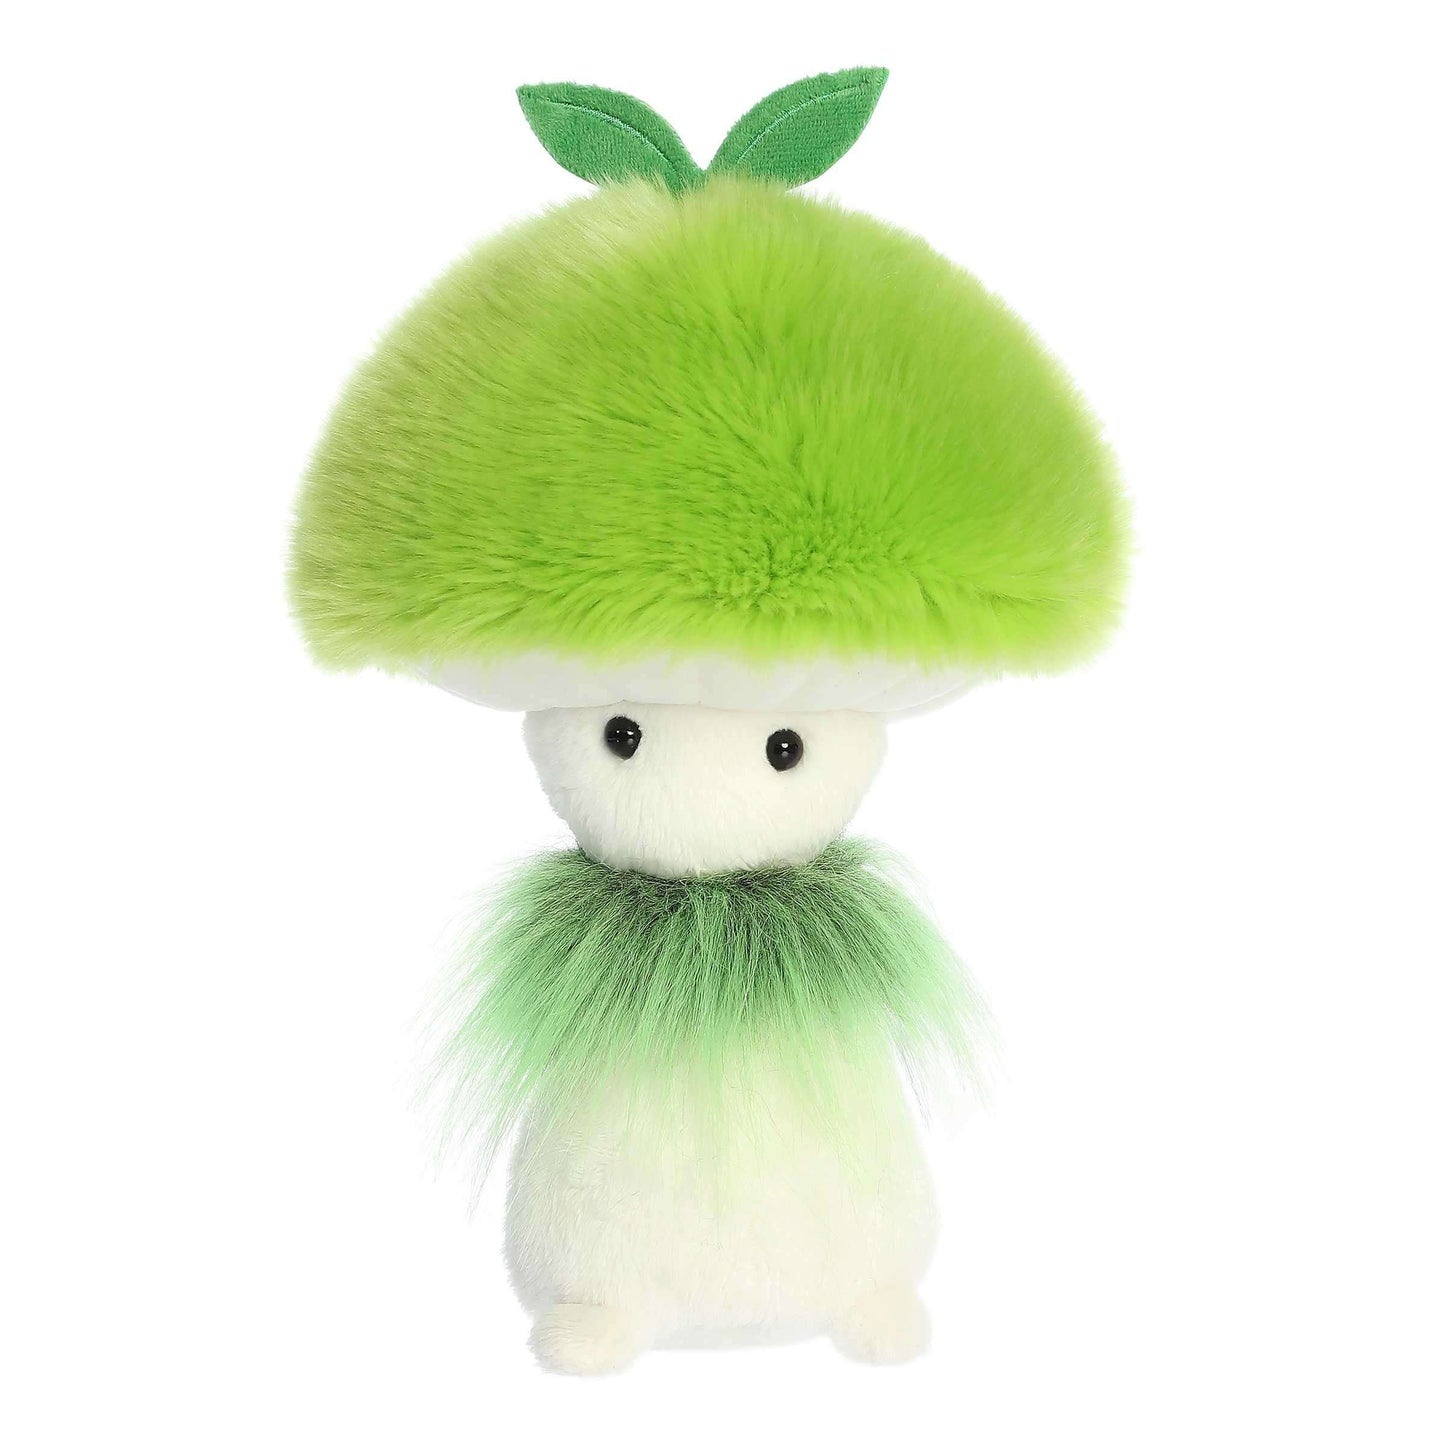 Aurora green germ mushroom